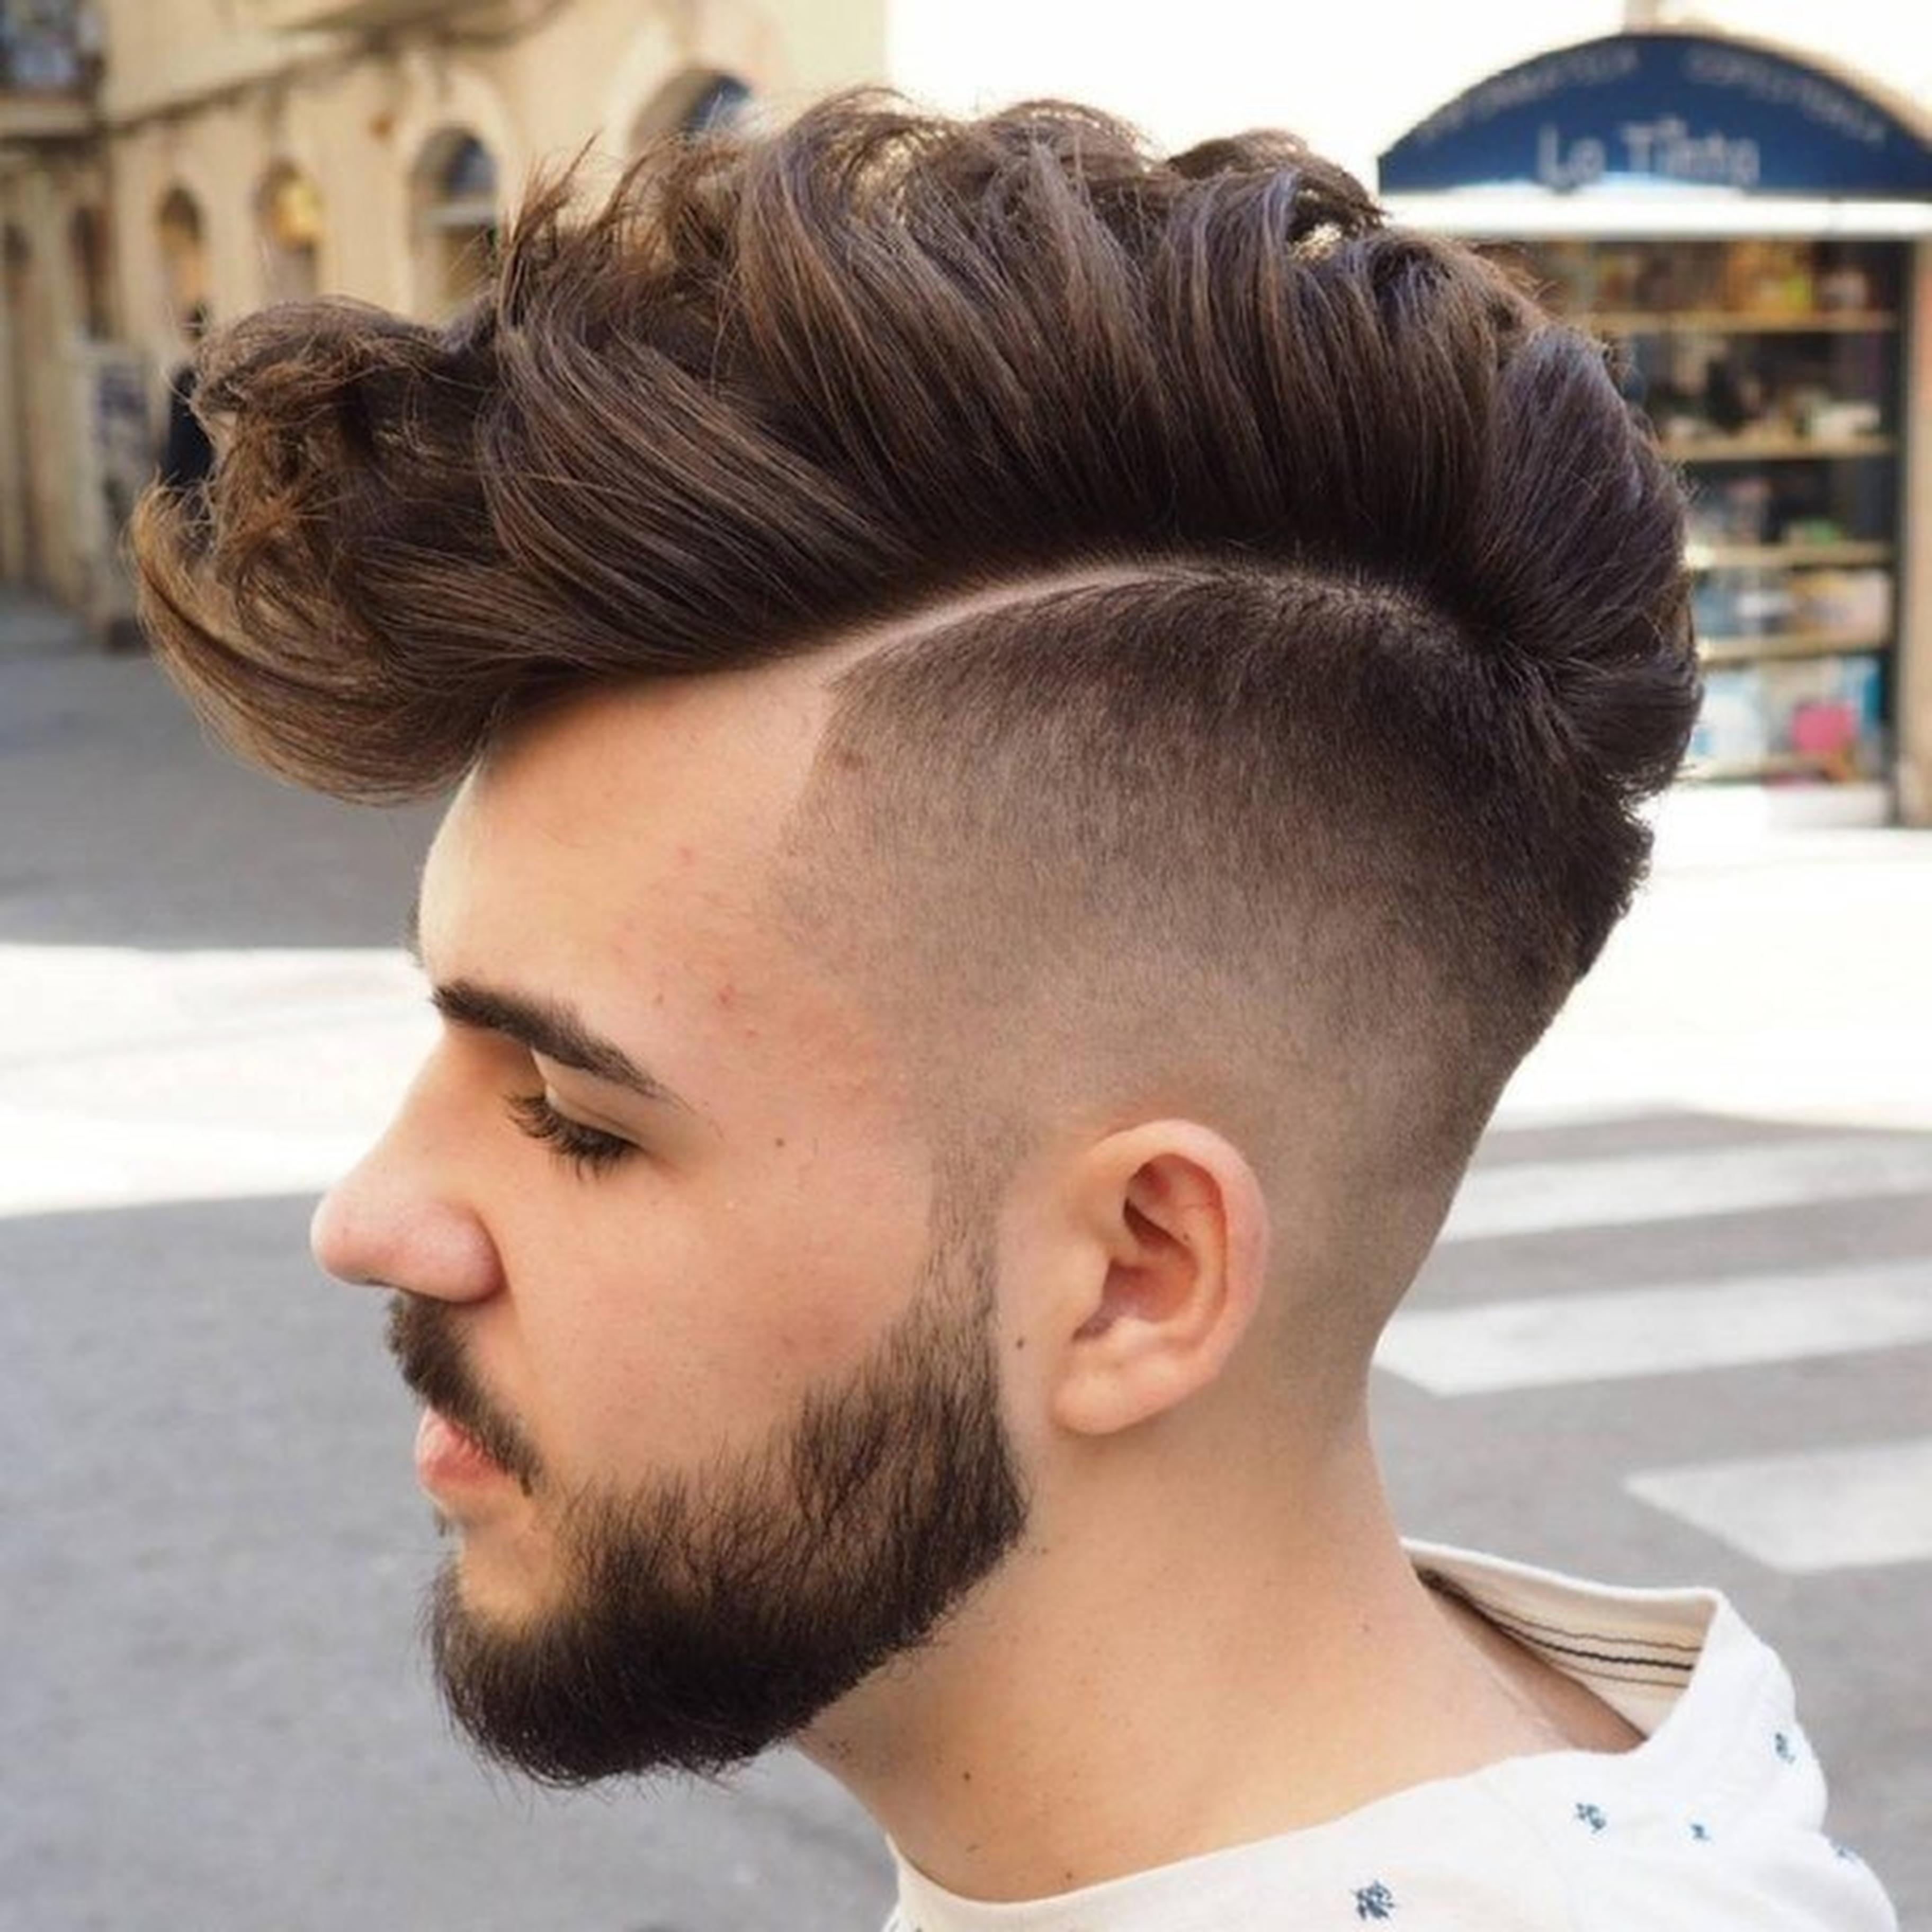 Image result for hair style men hd images | Rock hairstyles, Cool  hairstyles for men, Mens hairstyles short